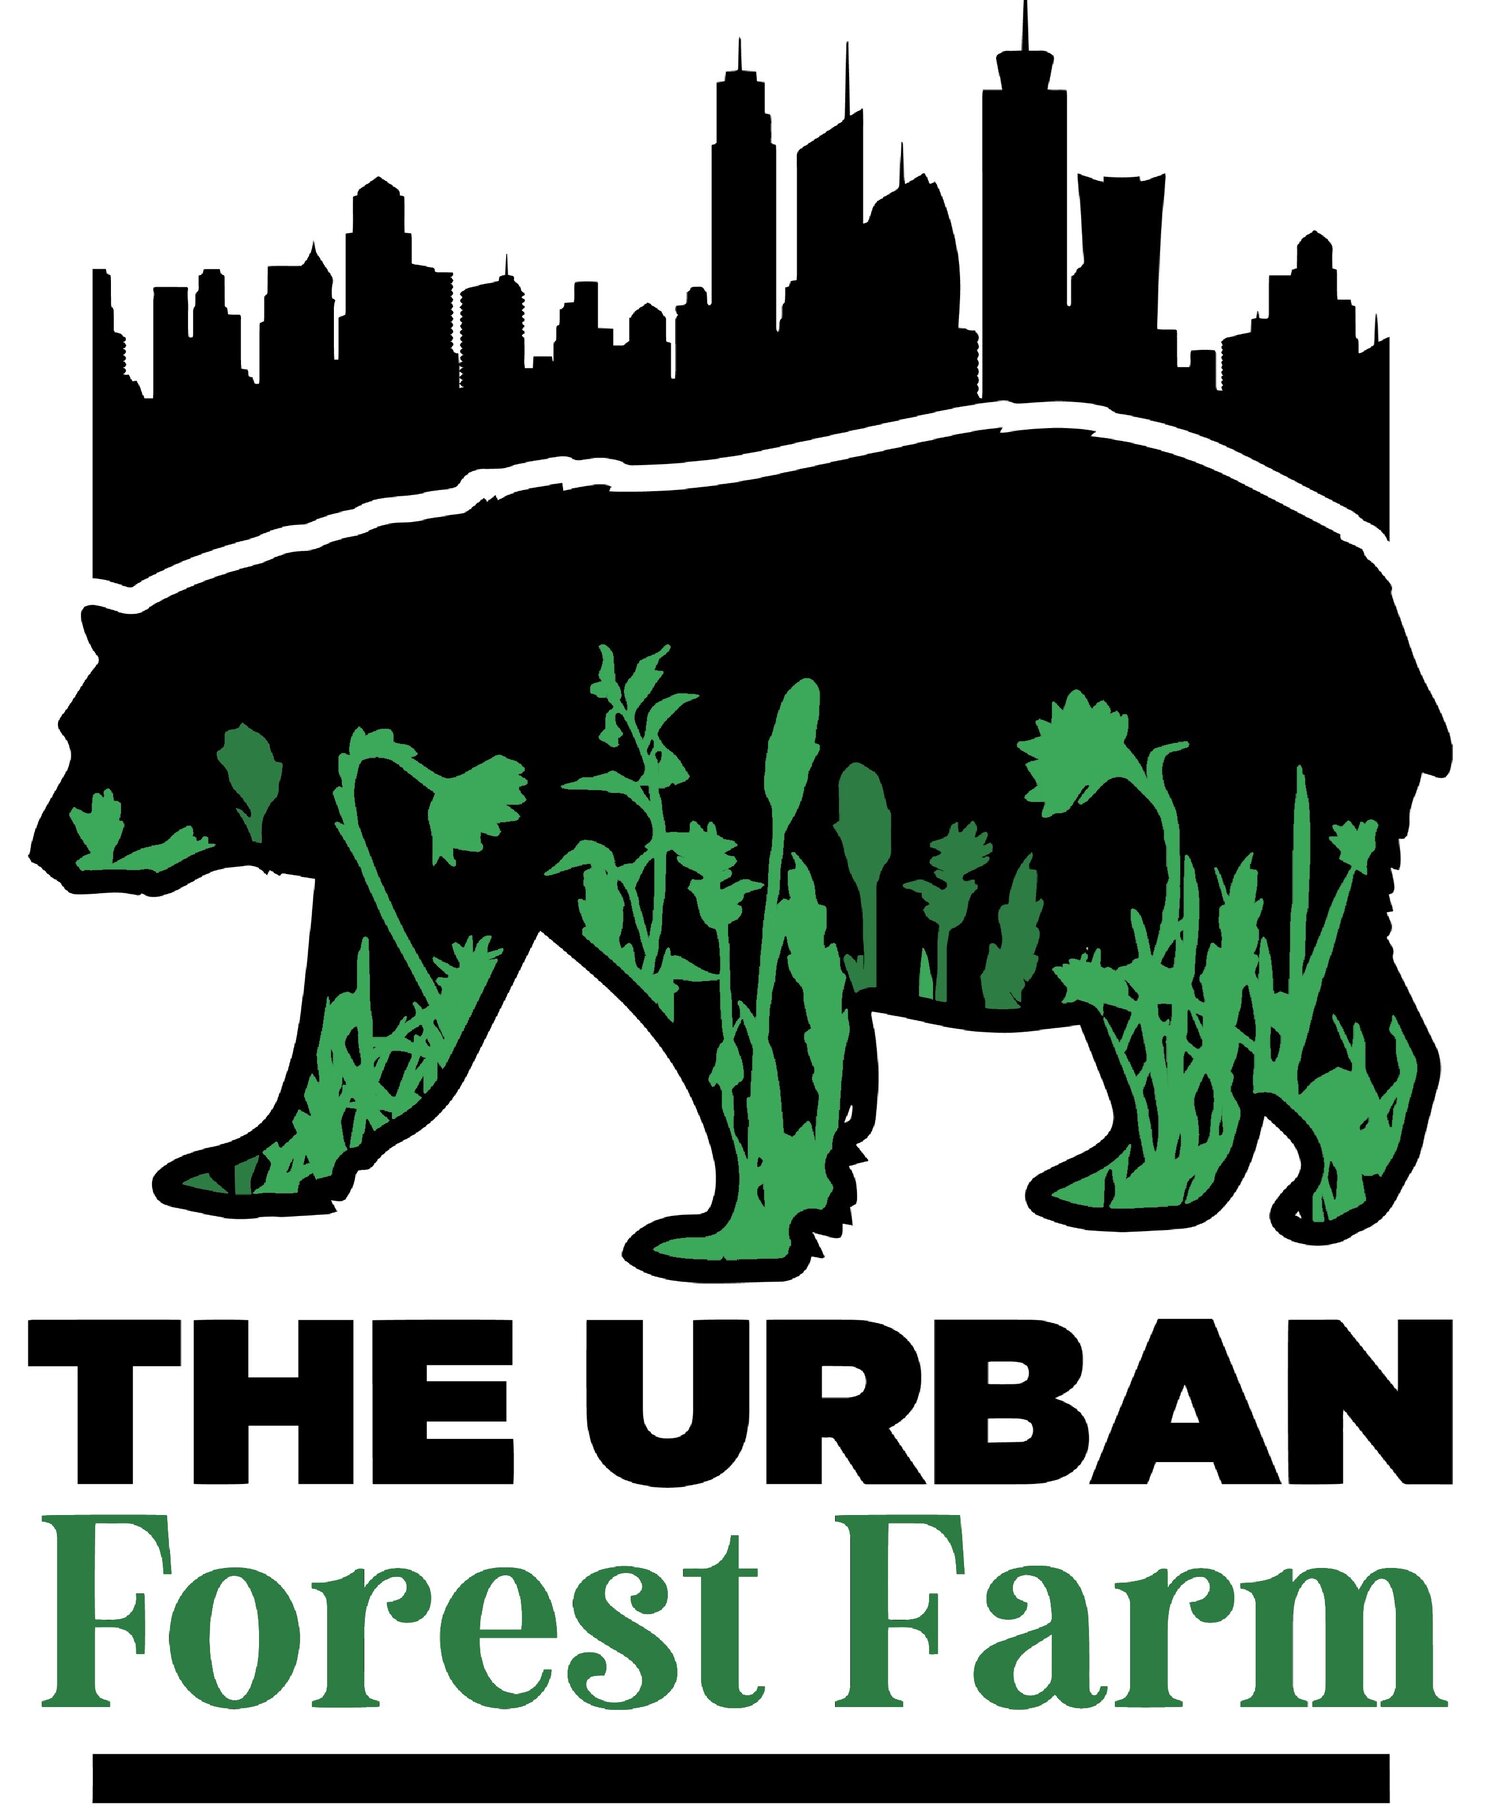 The Urban Forest Farm